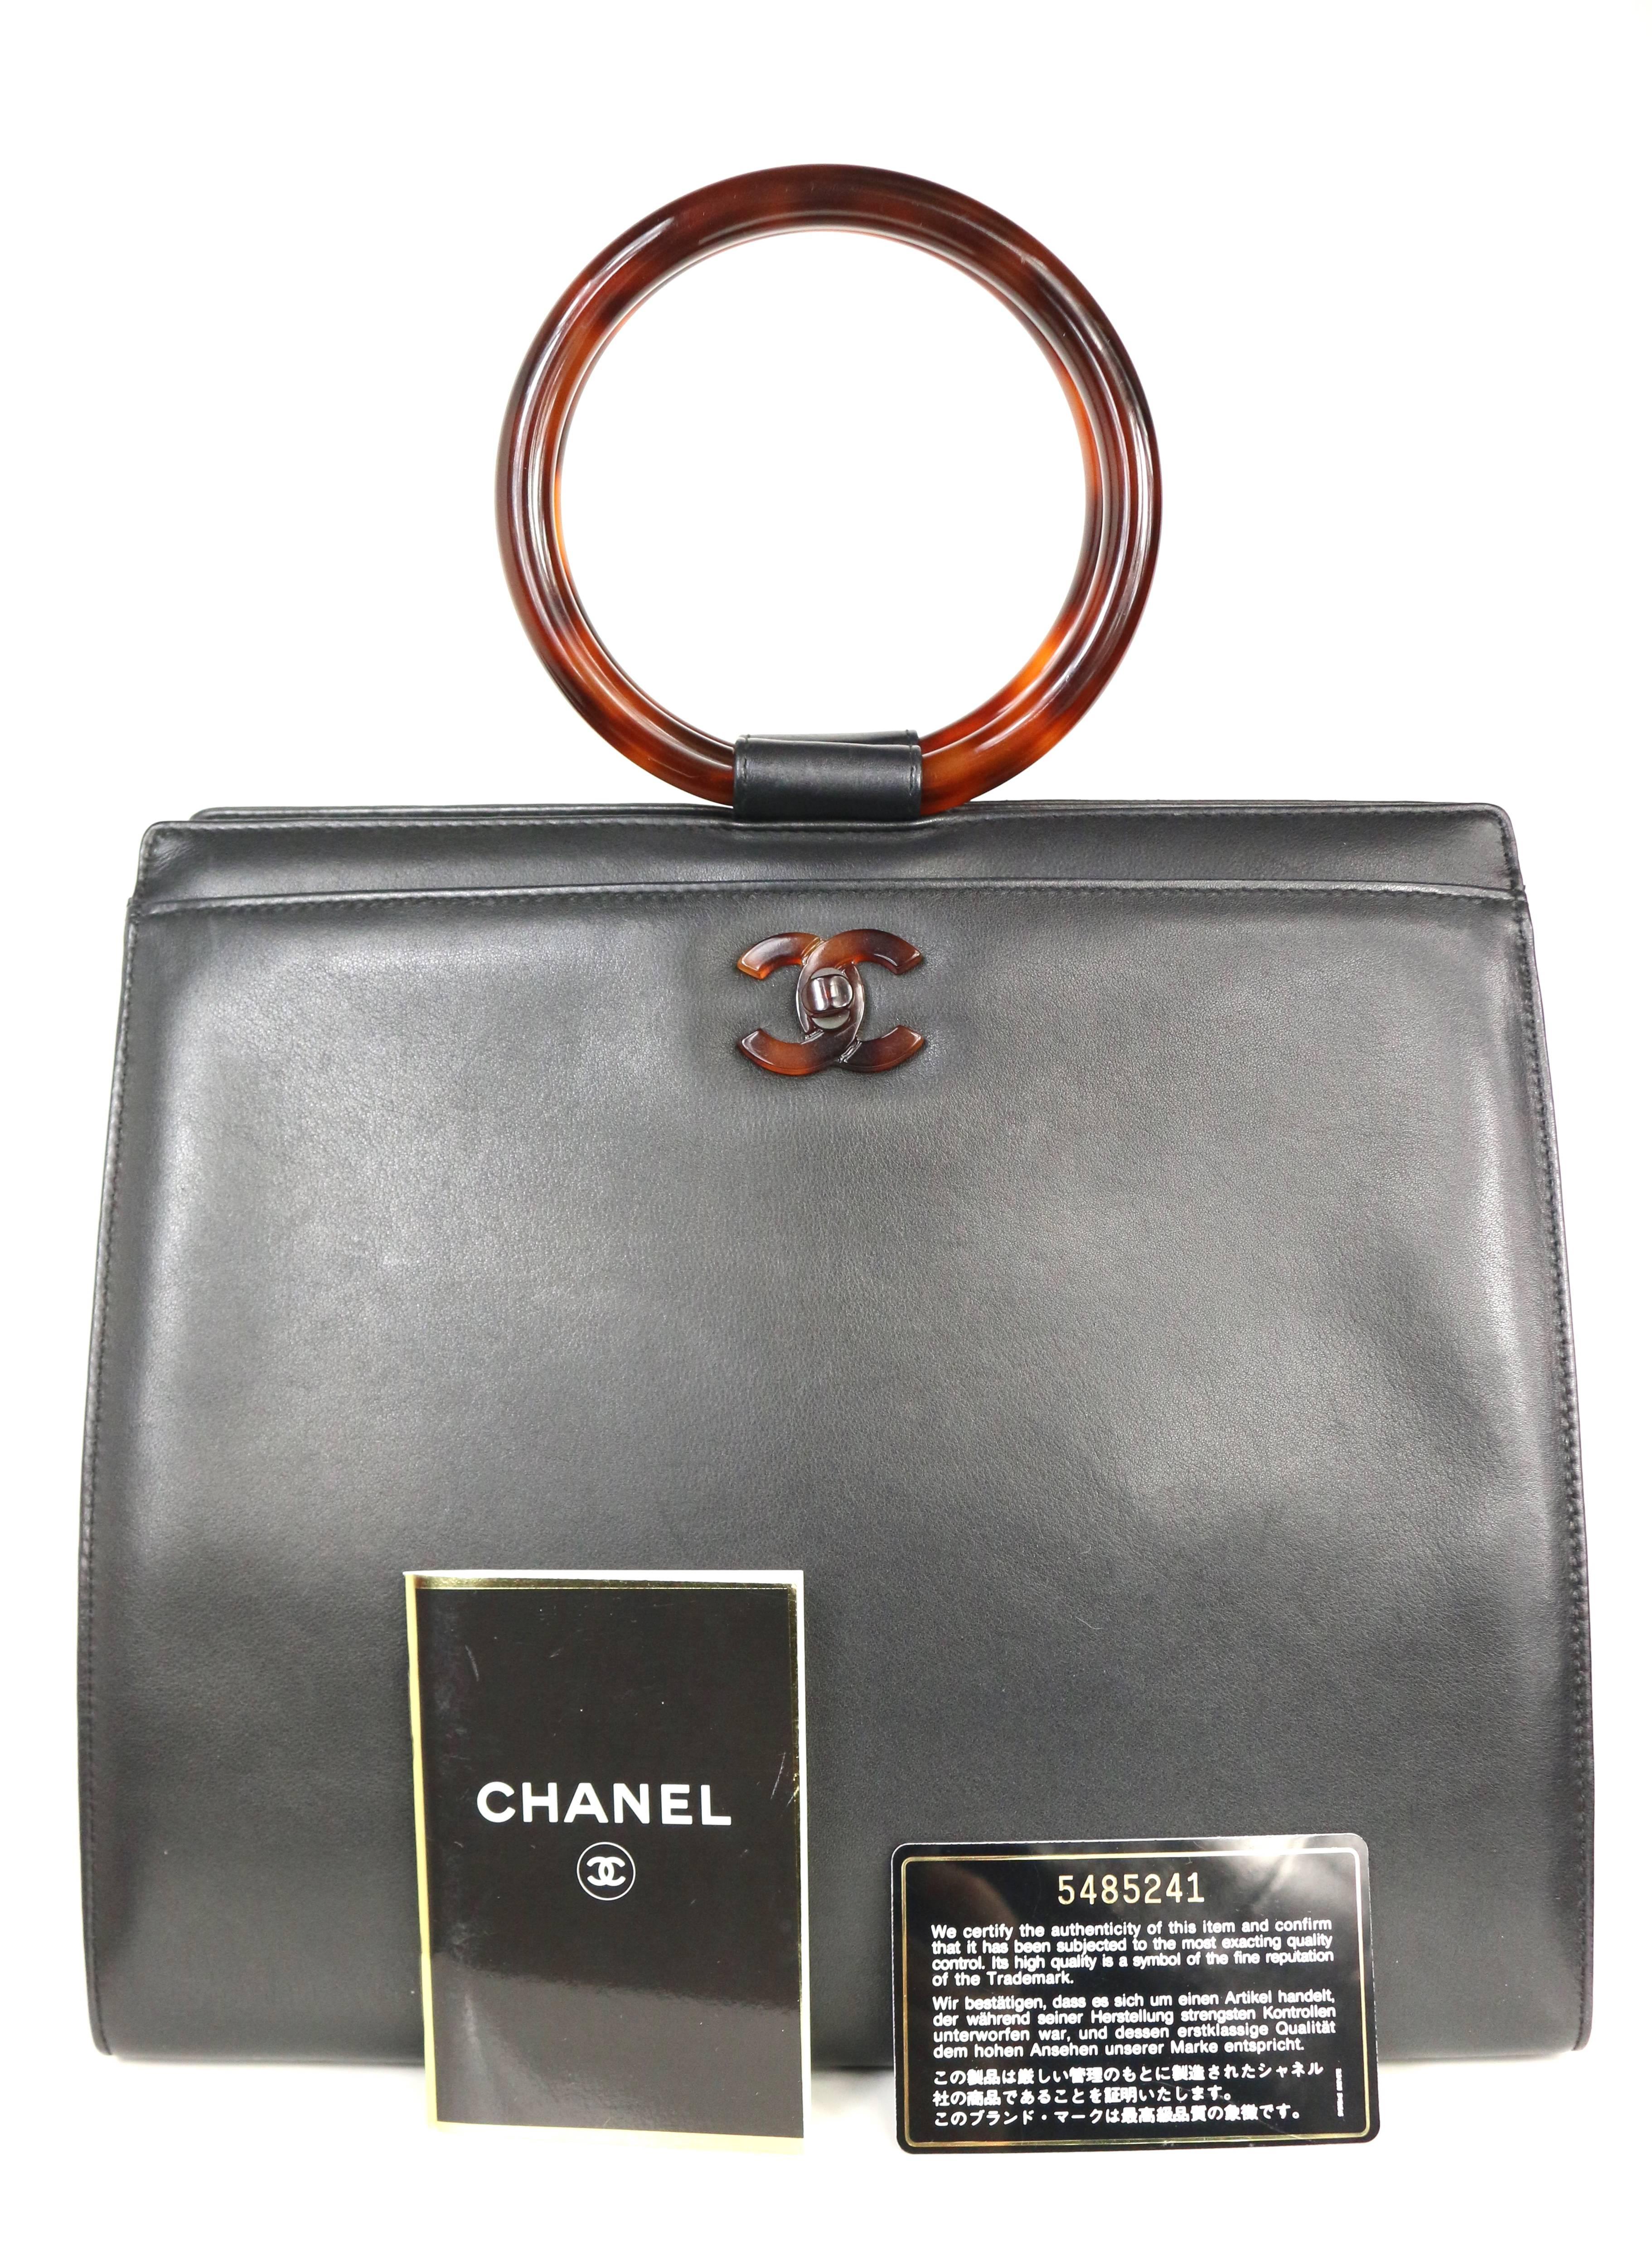 Chanel Black Leather Tortoiseshell Handle Handbag 3